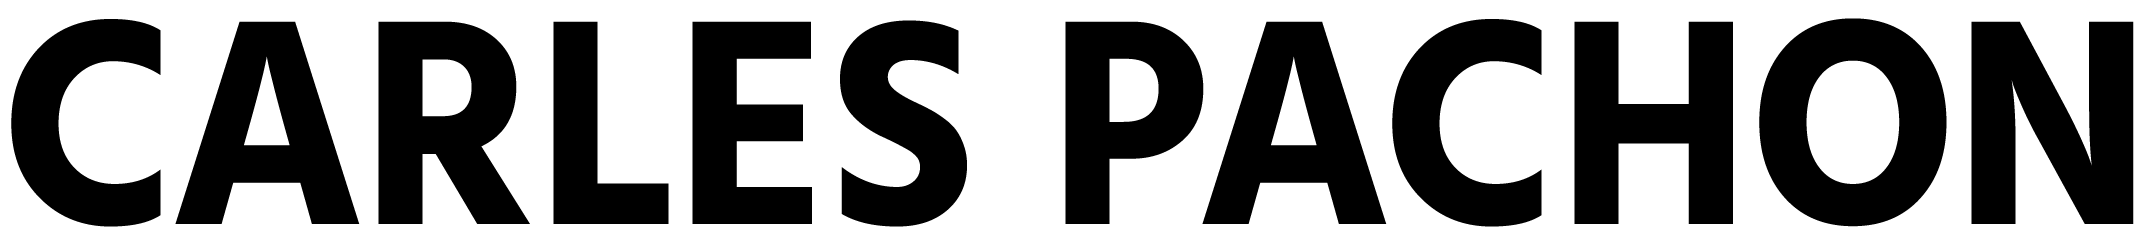 Carles Pachon logo web